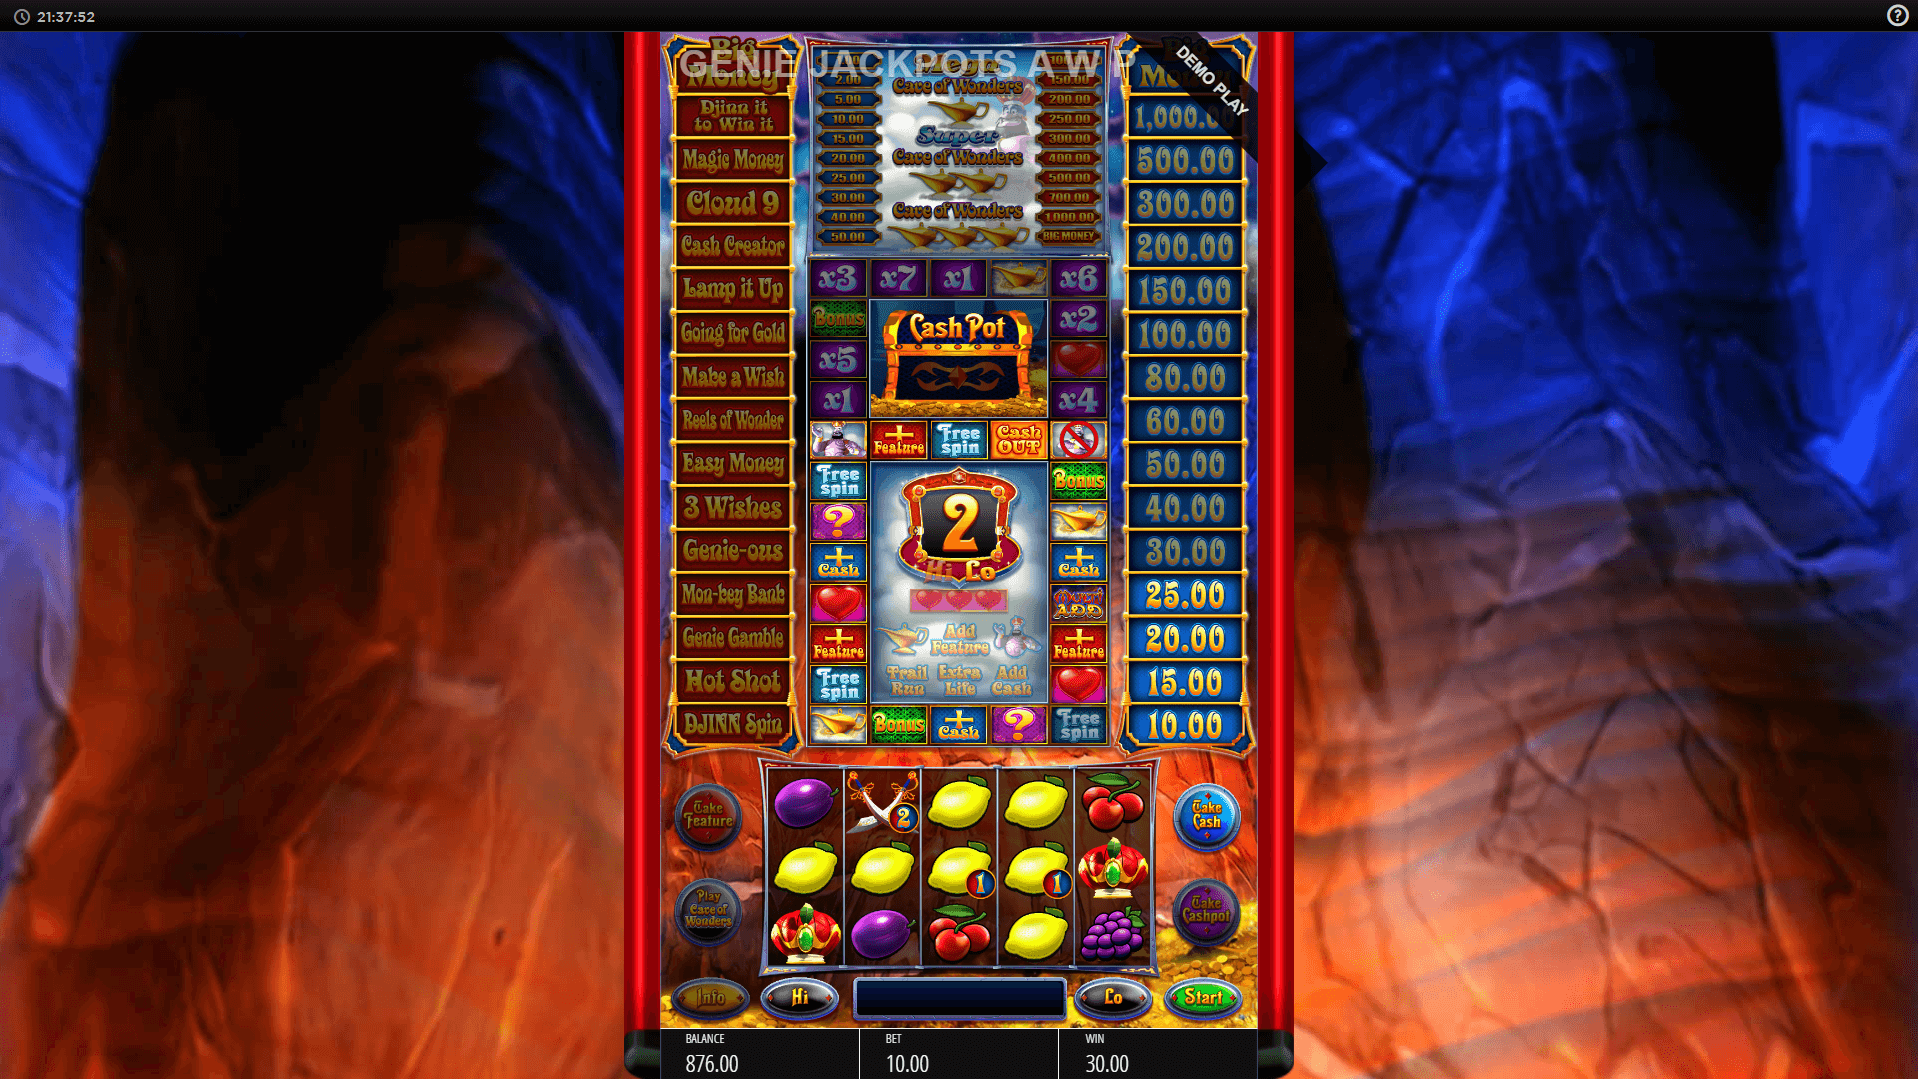 genie jackpots cave of wonders slot machine detail image 1